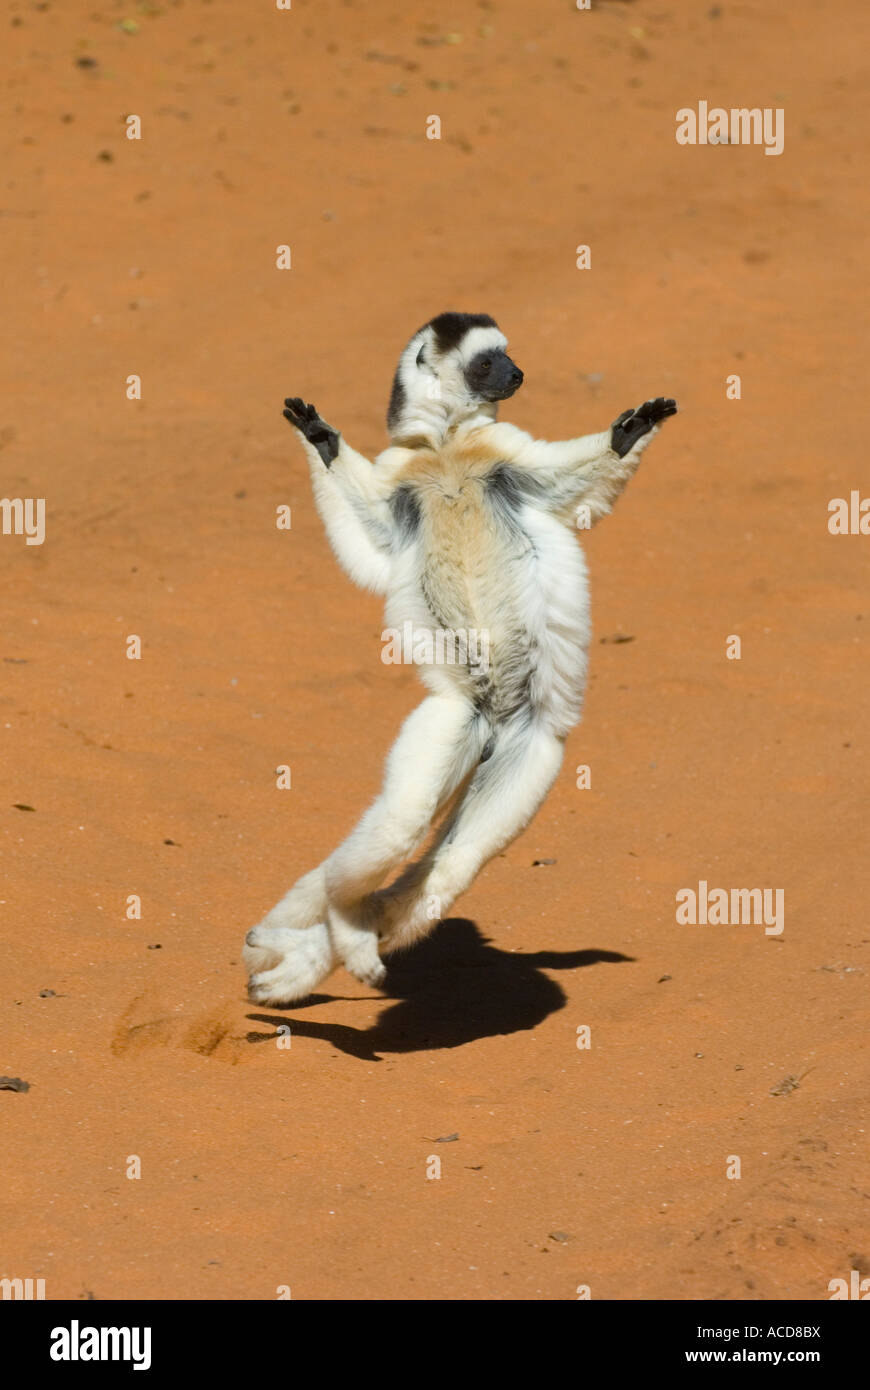 La Verreaux Sifaka Lemur (Propithecus verreauxi) 'Dancing' riserva Berenty, Madagascar meridionale in via di estinzione Foto Stock